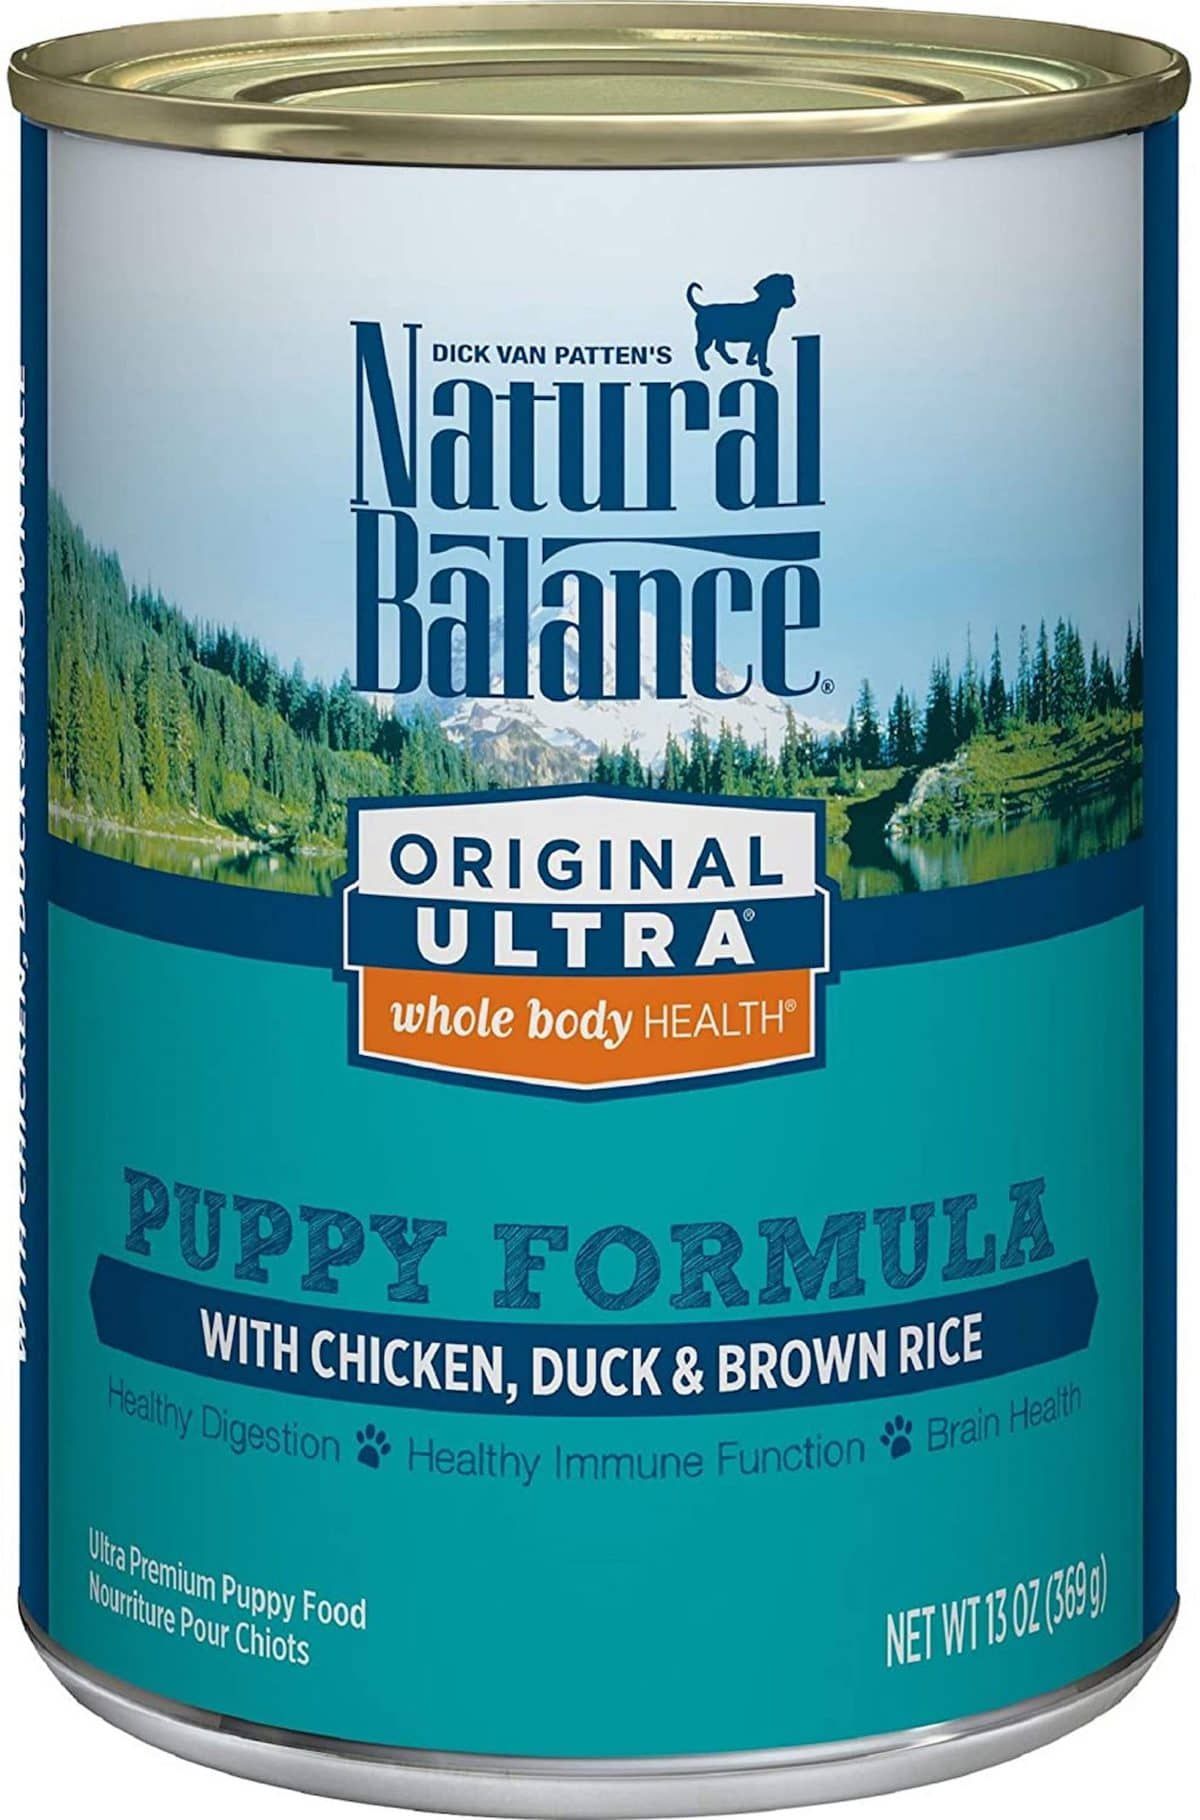 Natural Balance Original Ultra Whole Body Health Wet Food